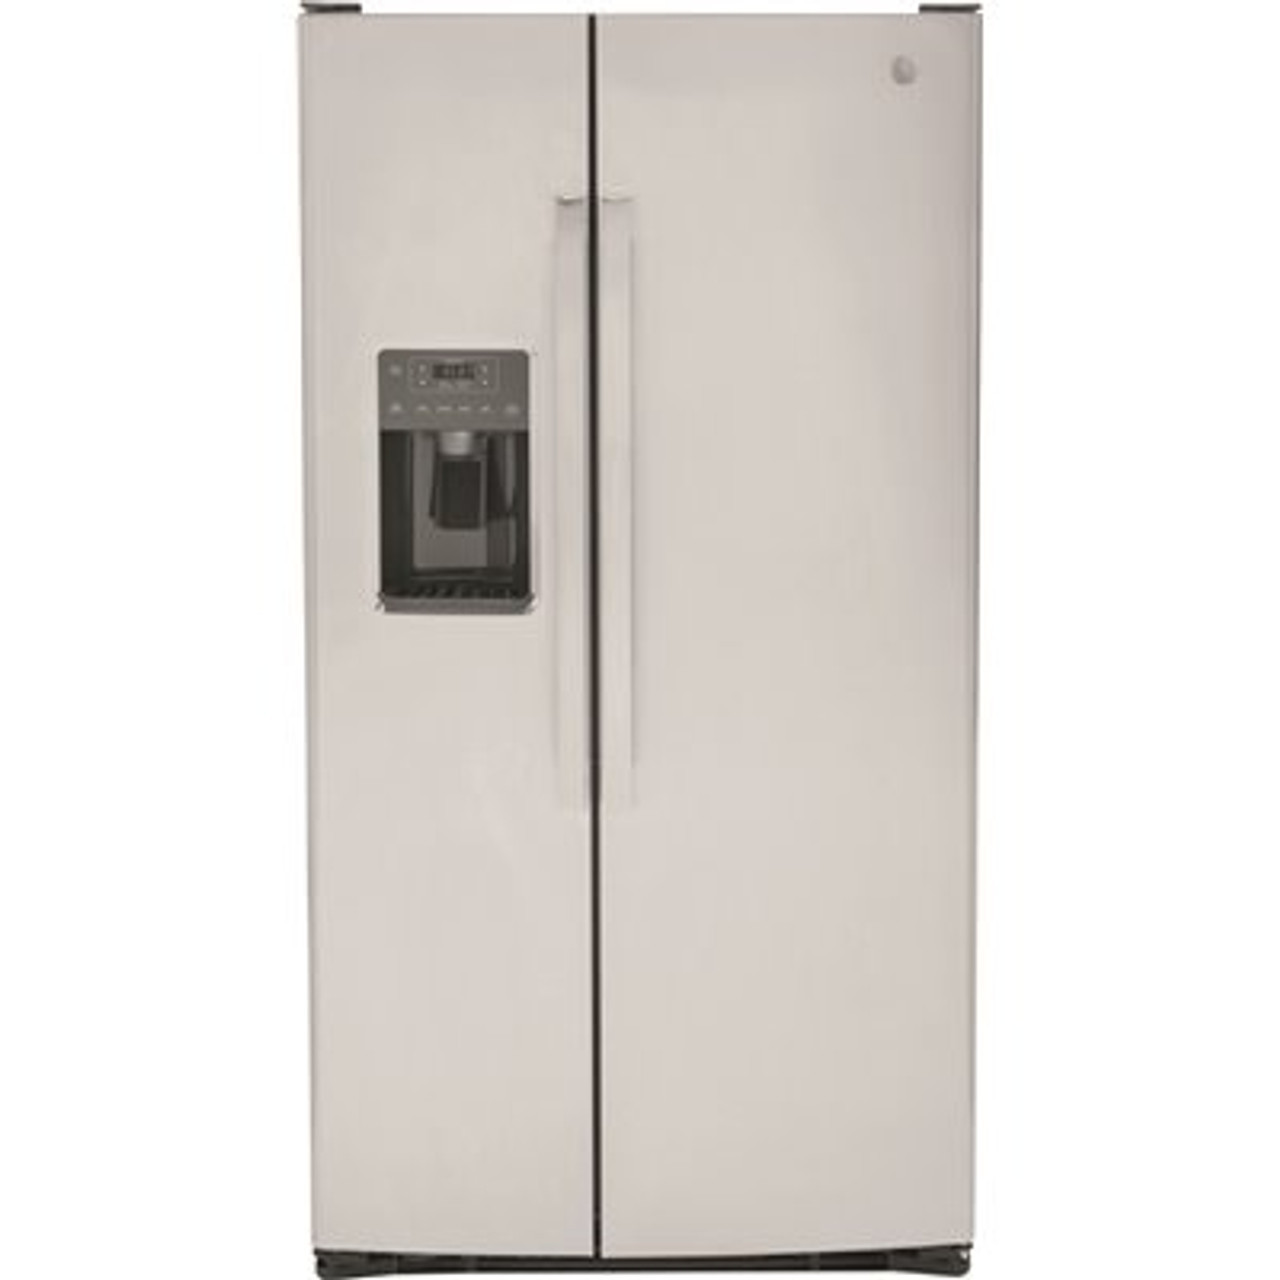 Ge 36 In. 25.3 Cu. Ft. Side By Side Refrigerator In Fingerprint Resistant Stainless Steel, Standard Depth - 318454840